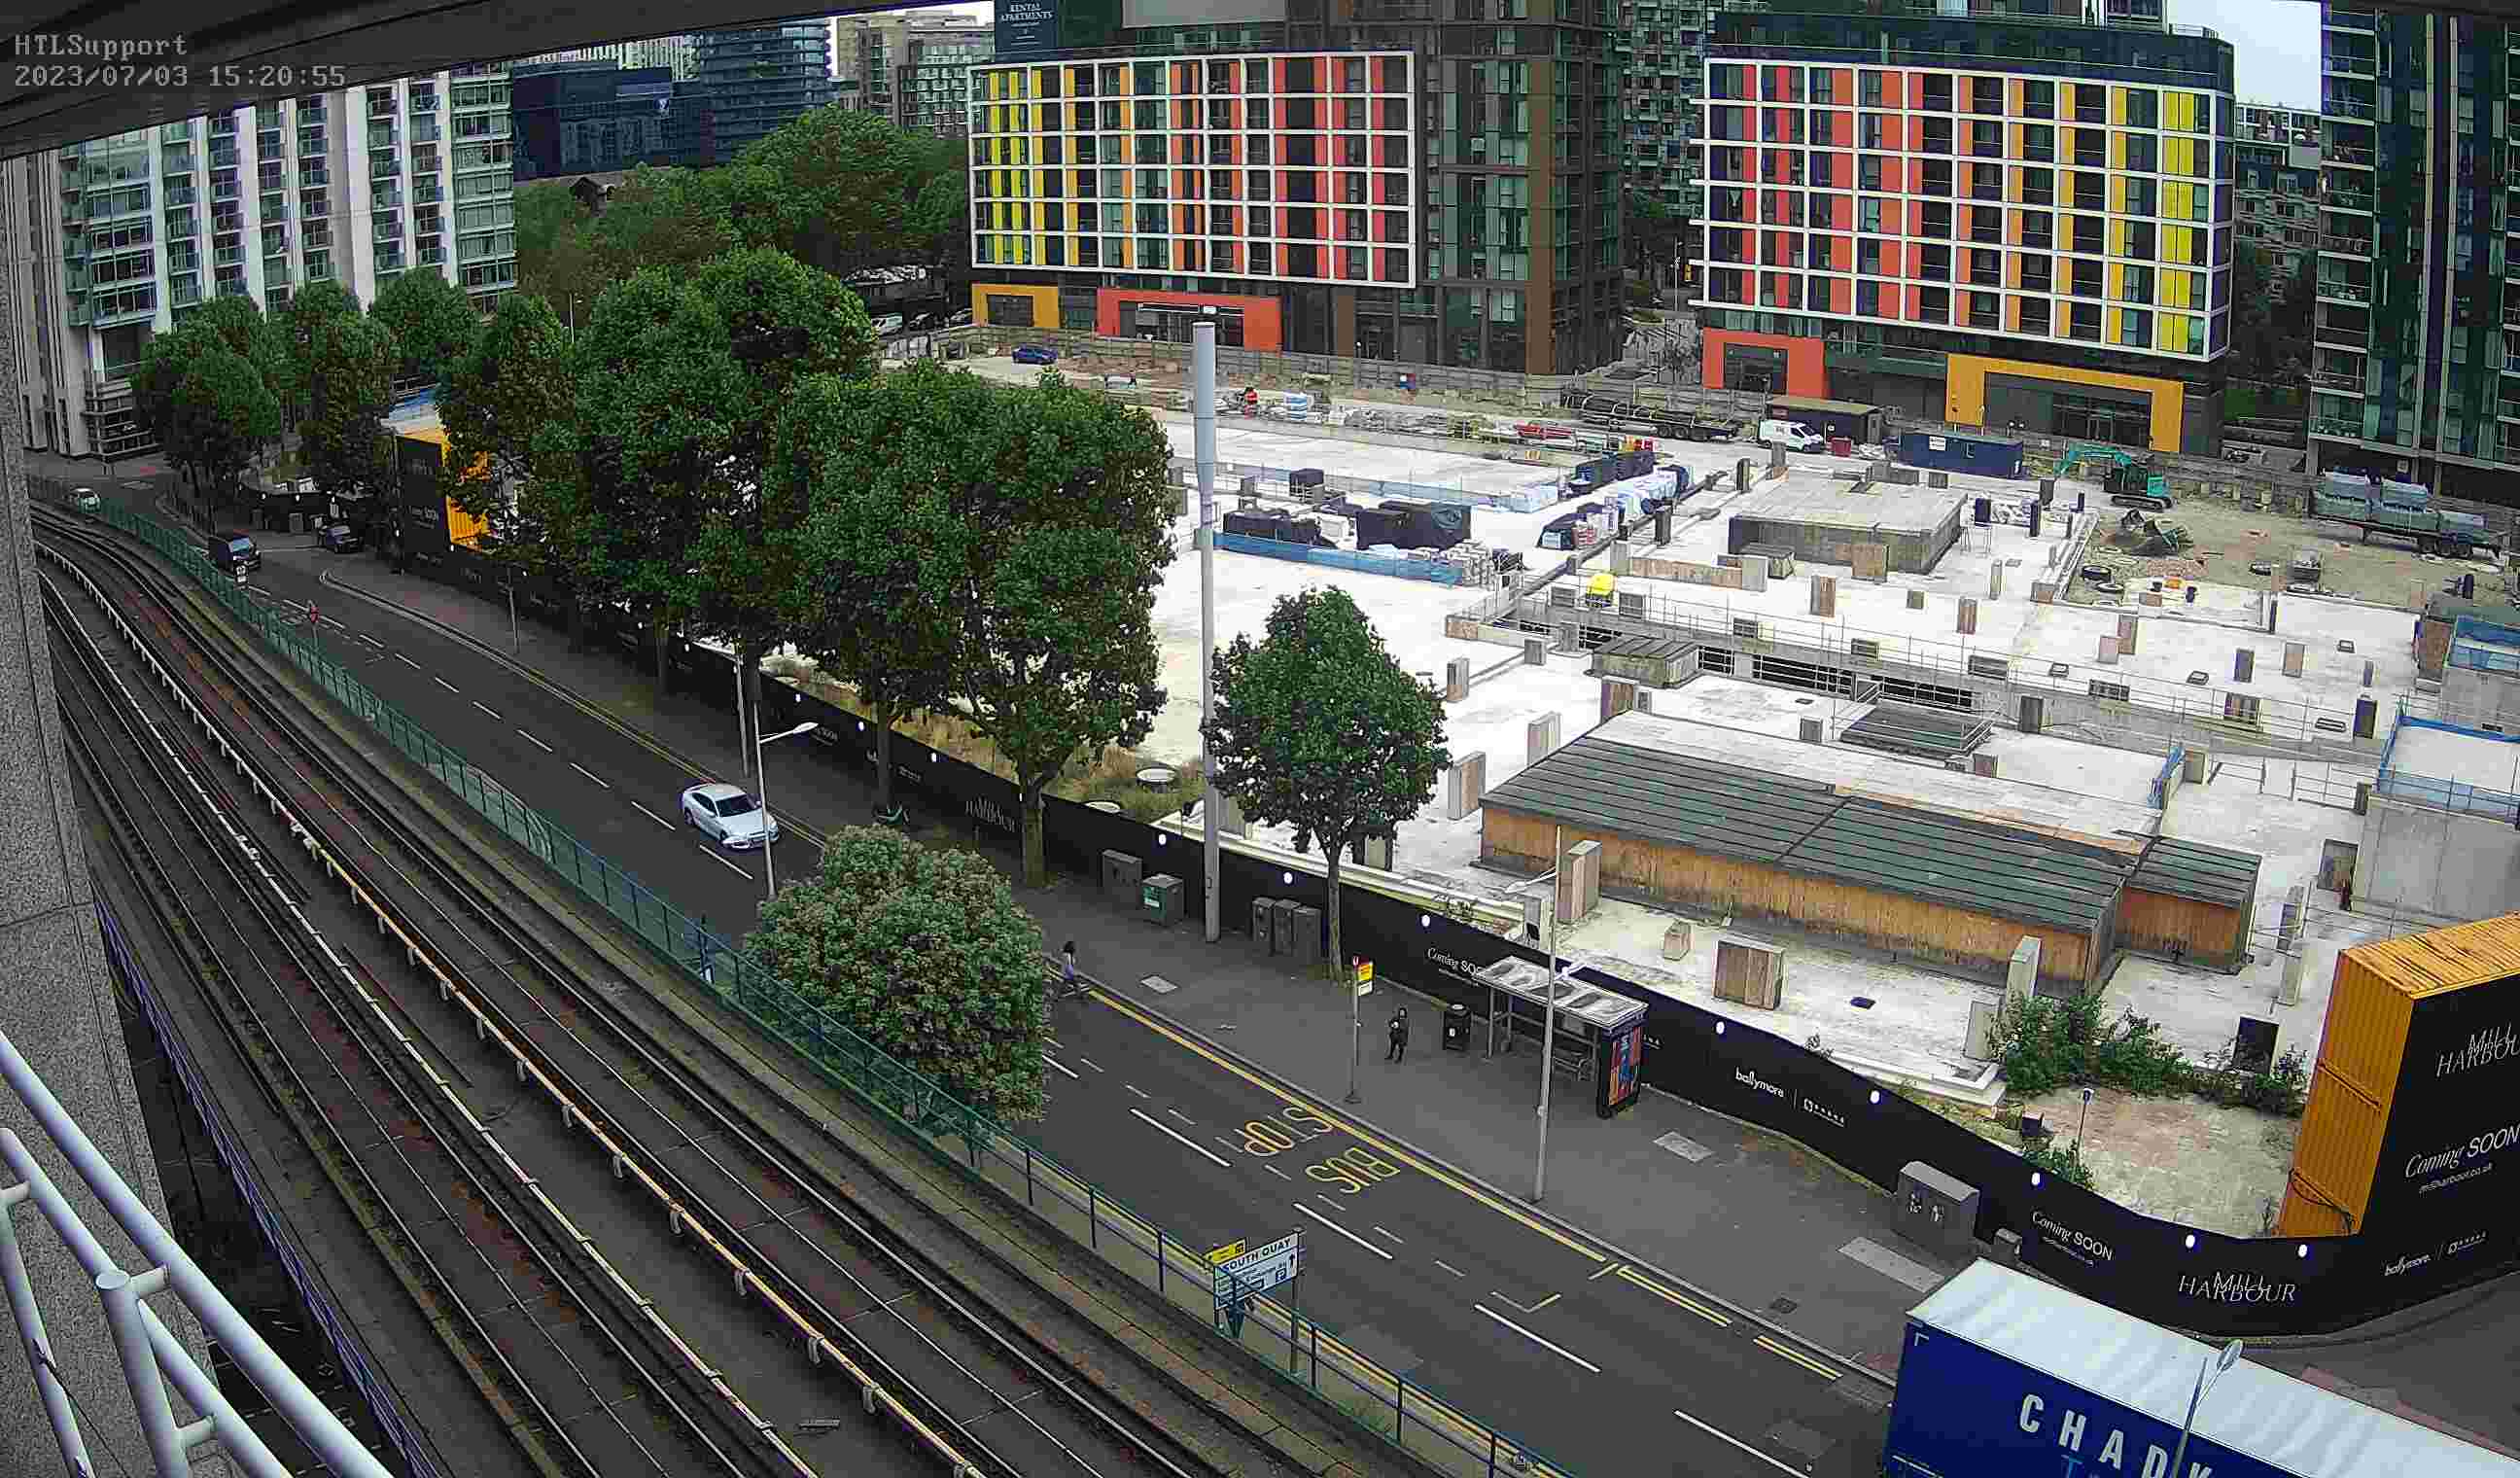 Webcam: London Docklands, Londra, Inghilterra